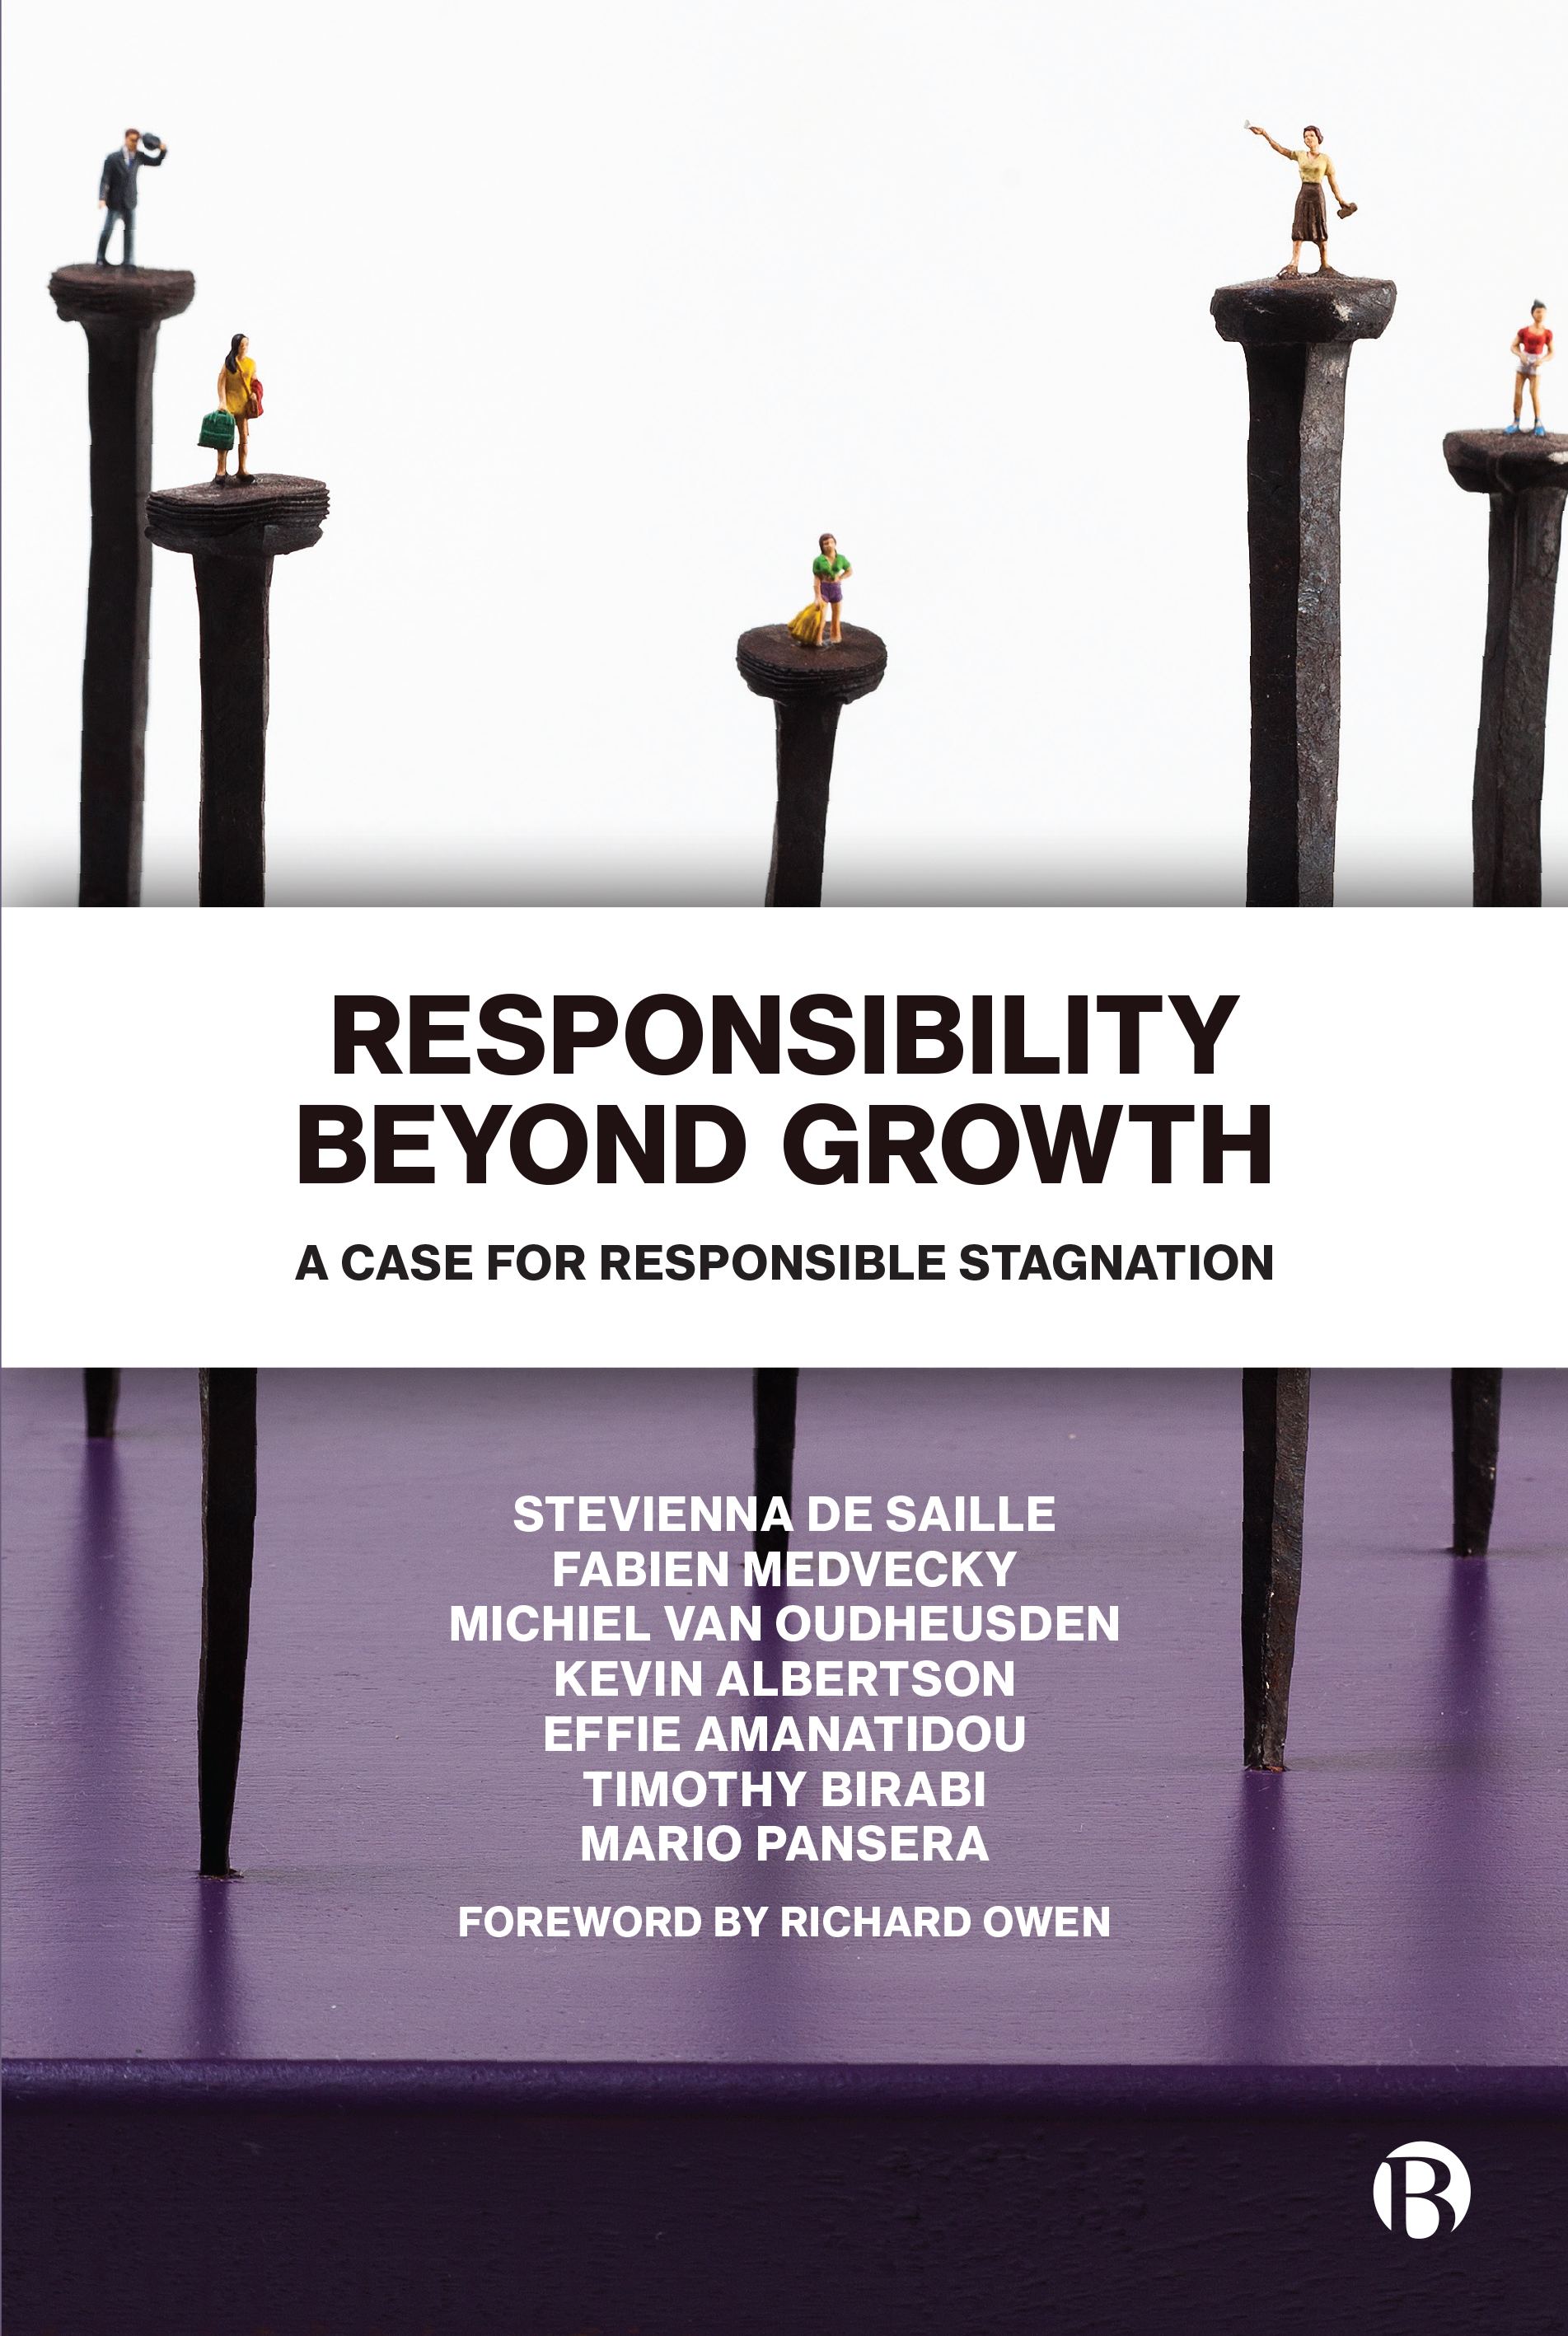 Responsibility Beyond Growth wins the EASST Chris Freeman Award